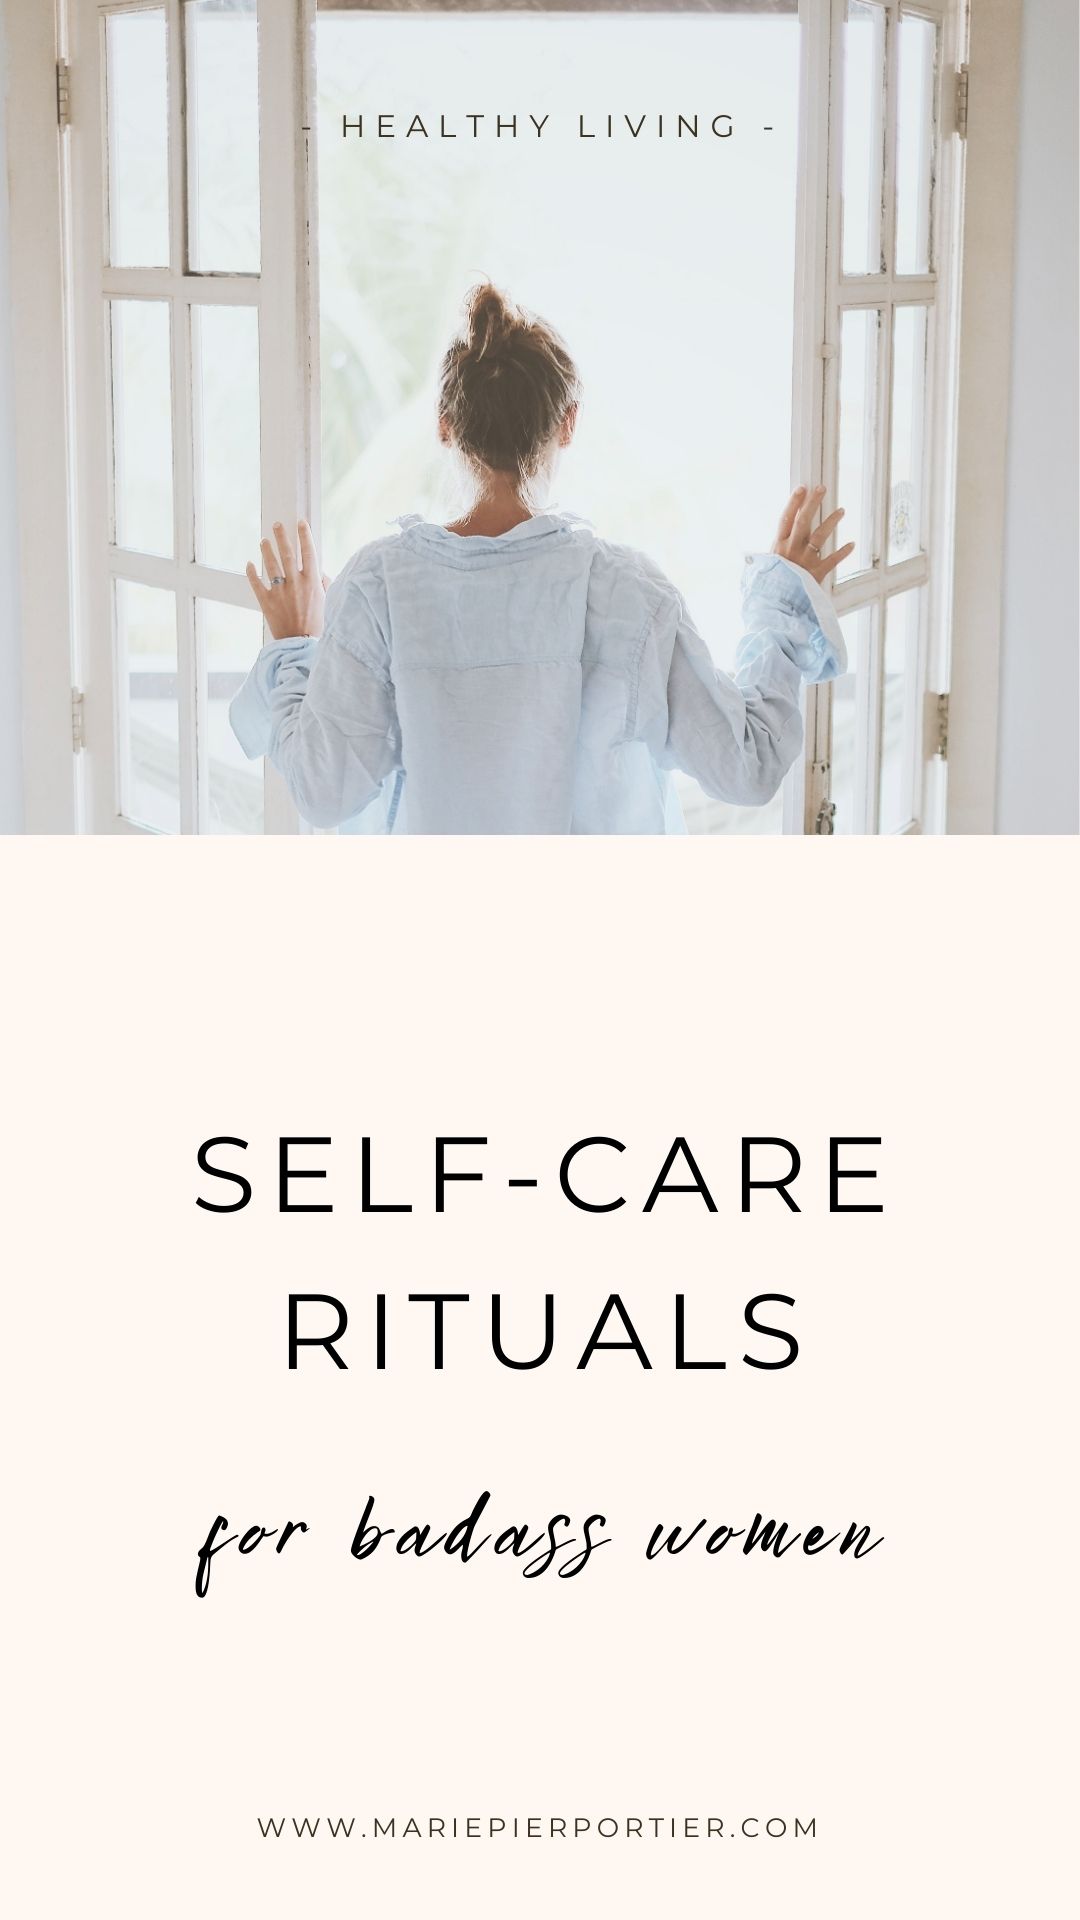 10 Self-Care Rituals To Make Yourself a Priority